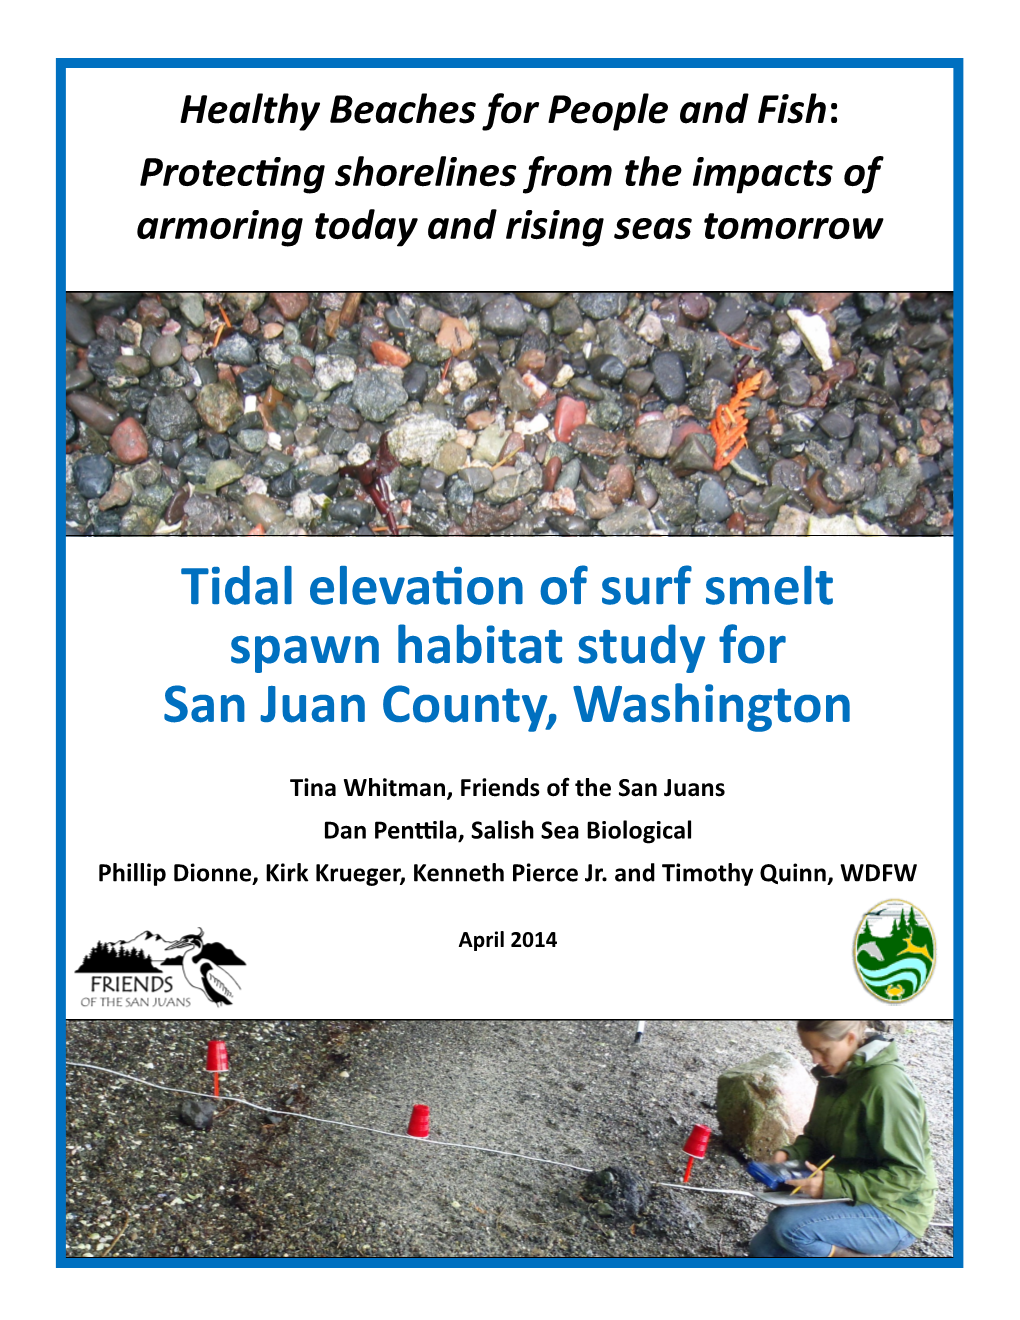 Tidal Elevation of Surf Smelt Spawn Habitat Study for San Juan County, Washington